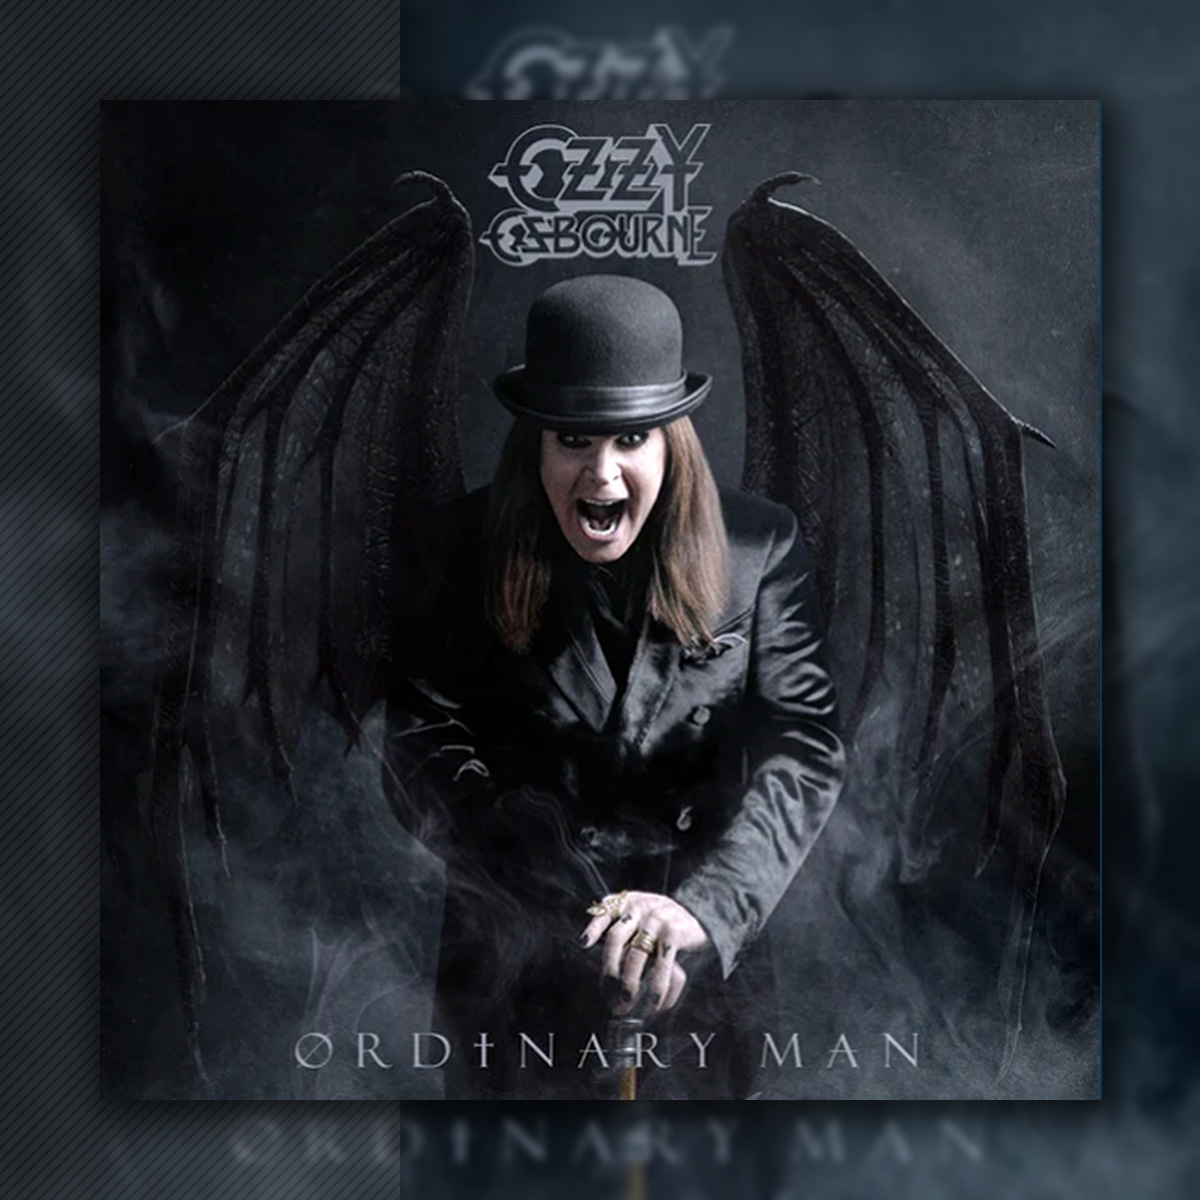 альбом Ozzy Osbourne "Ordinary Man"